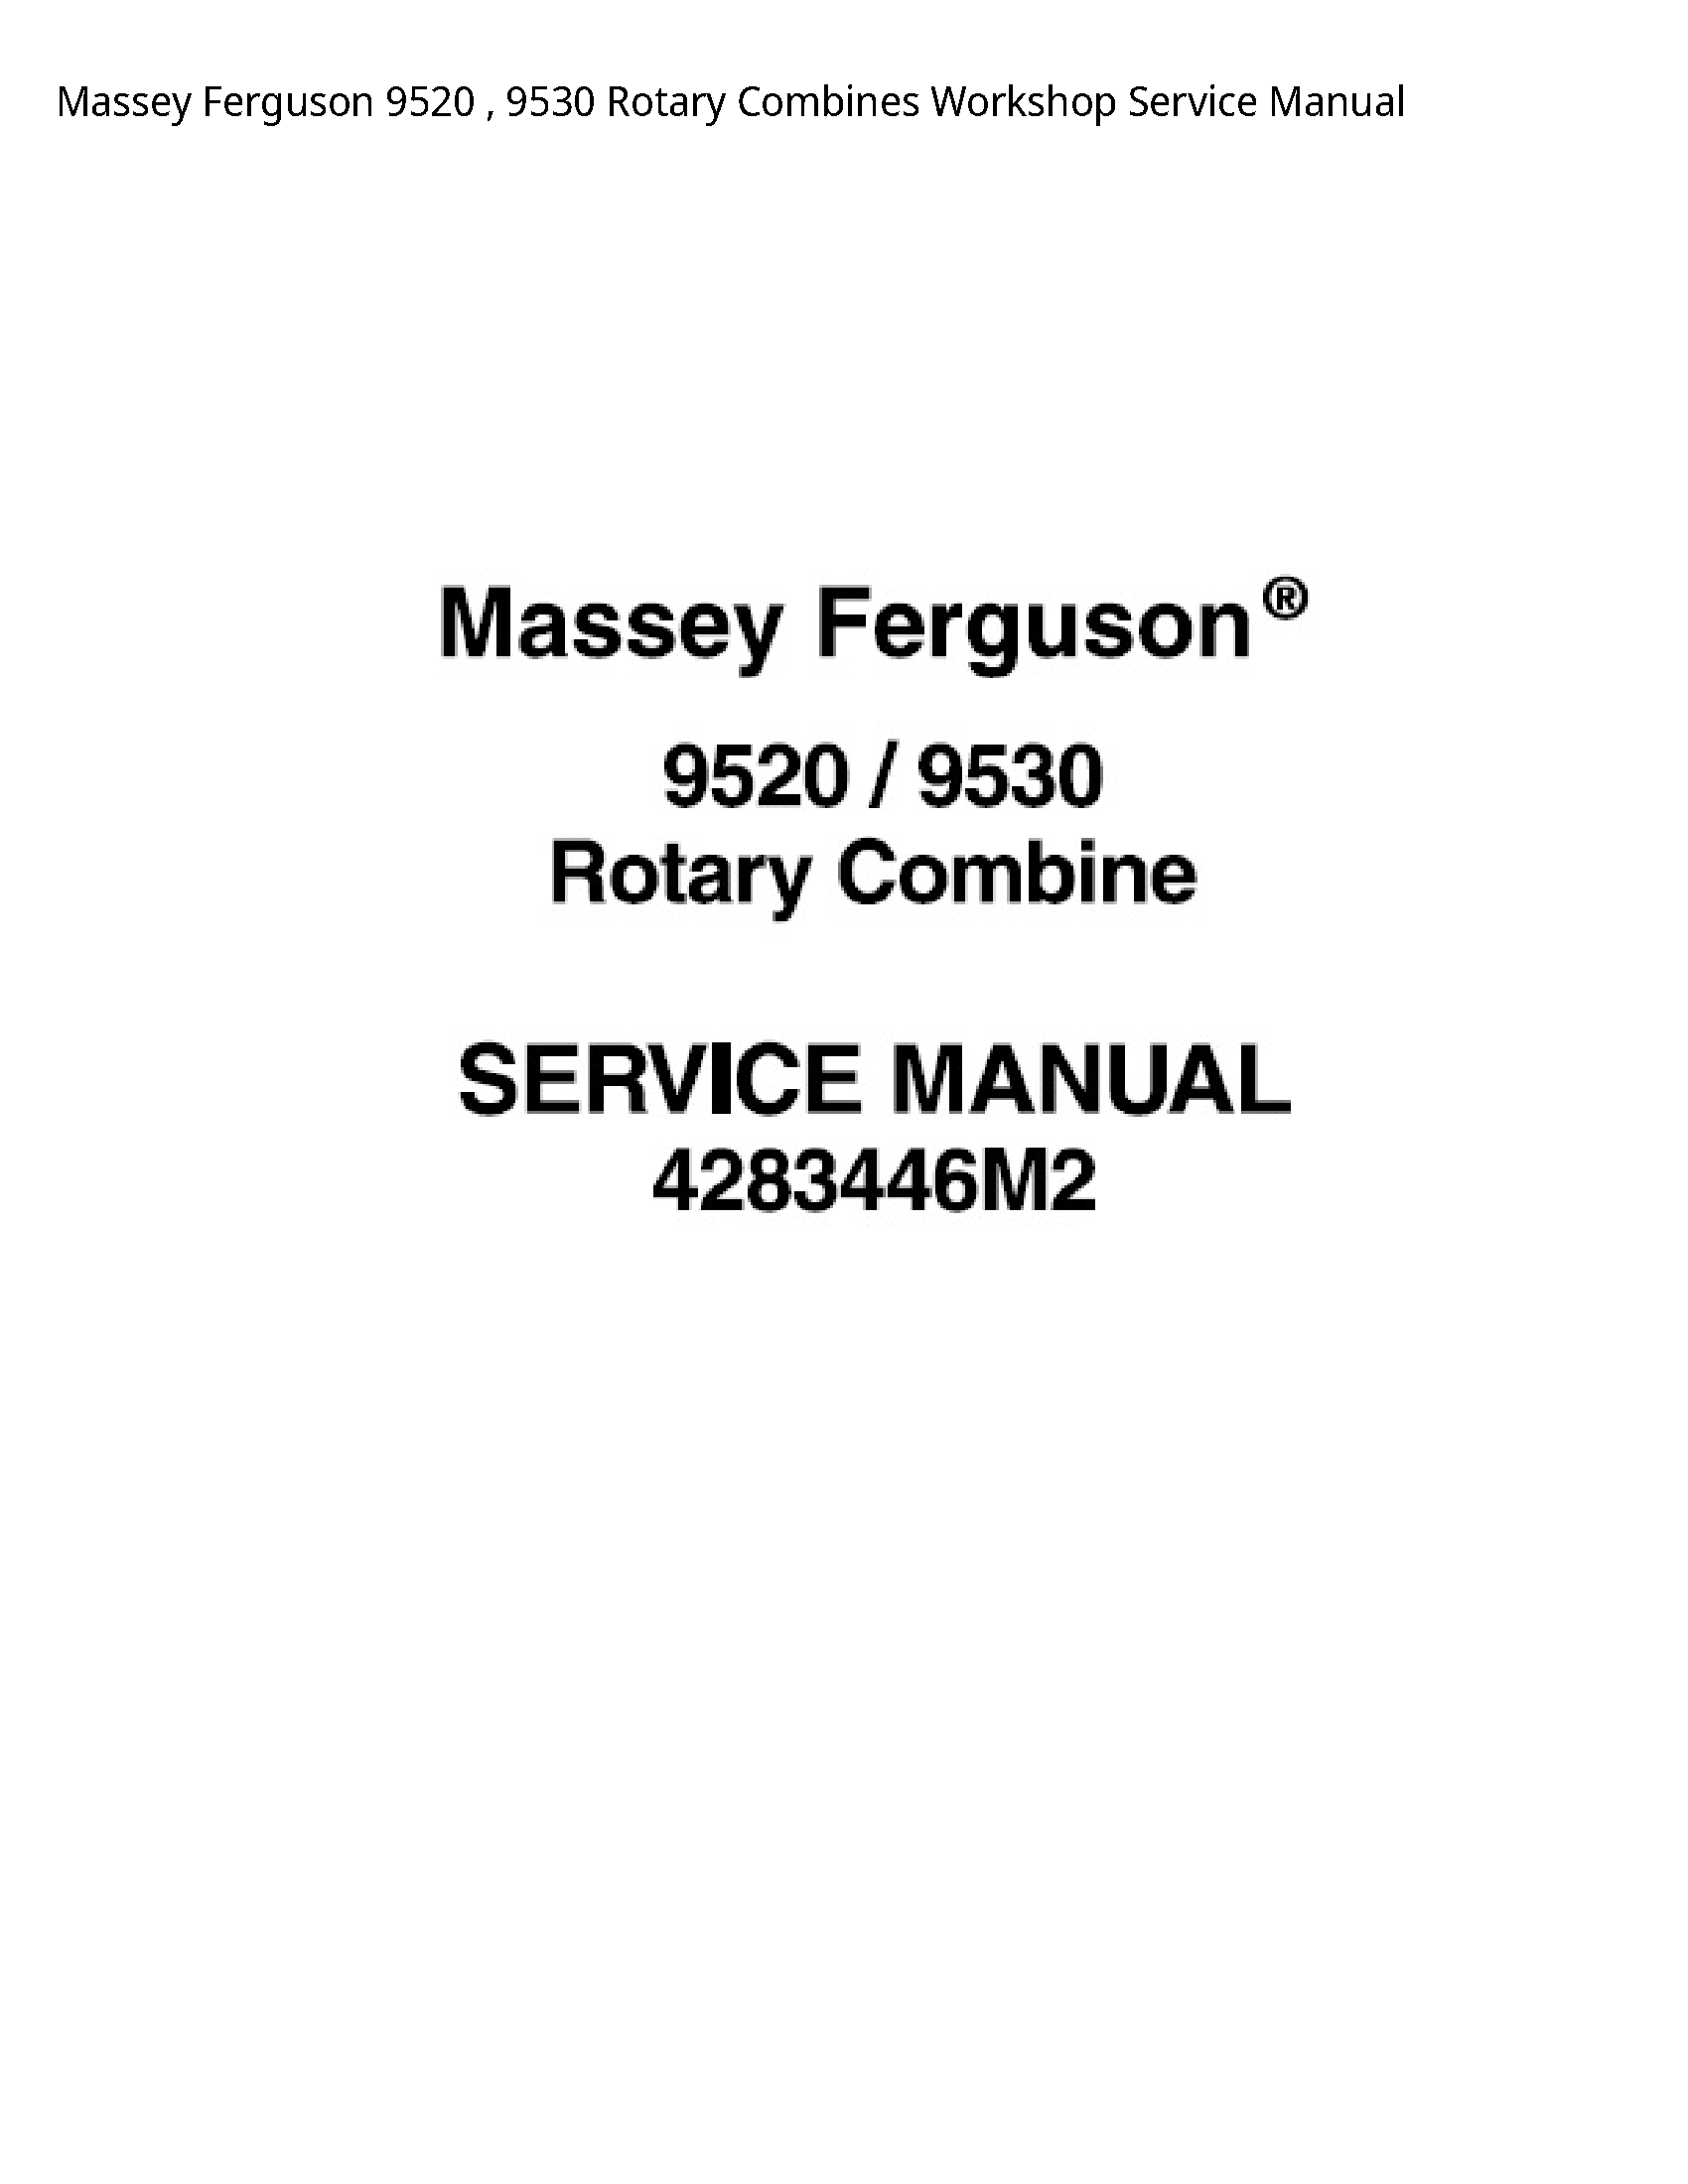 Massey Ferguson 9520 Rotary Combines Service manual